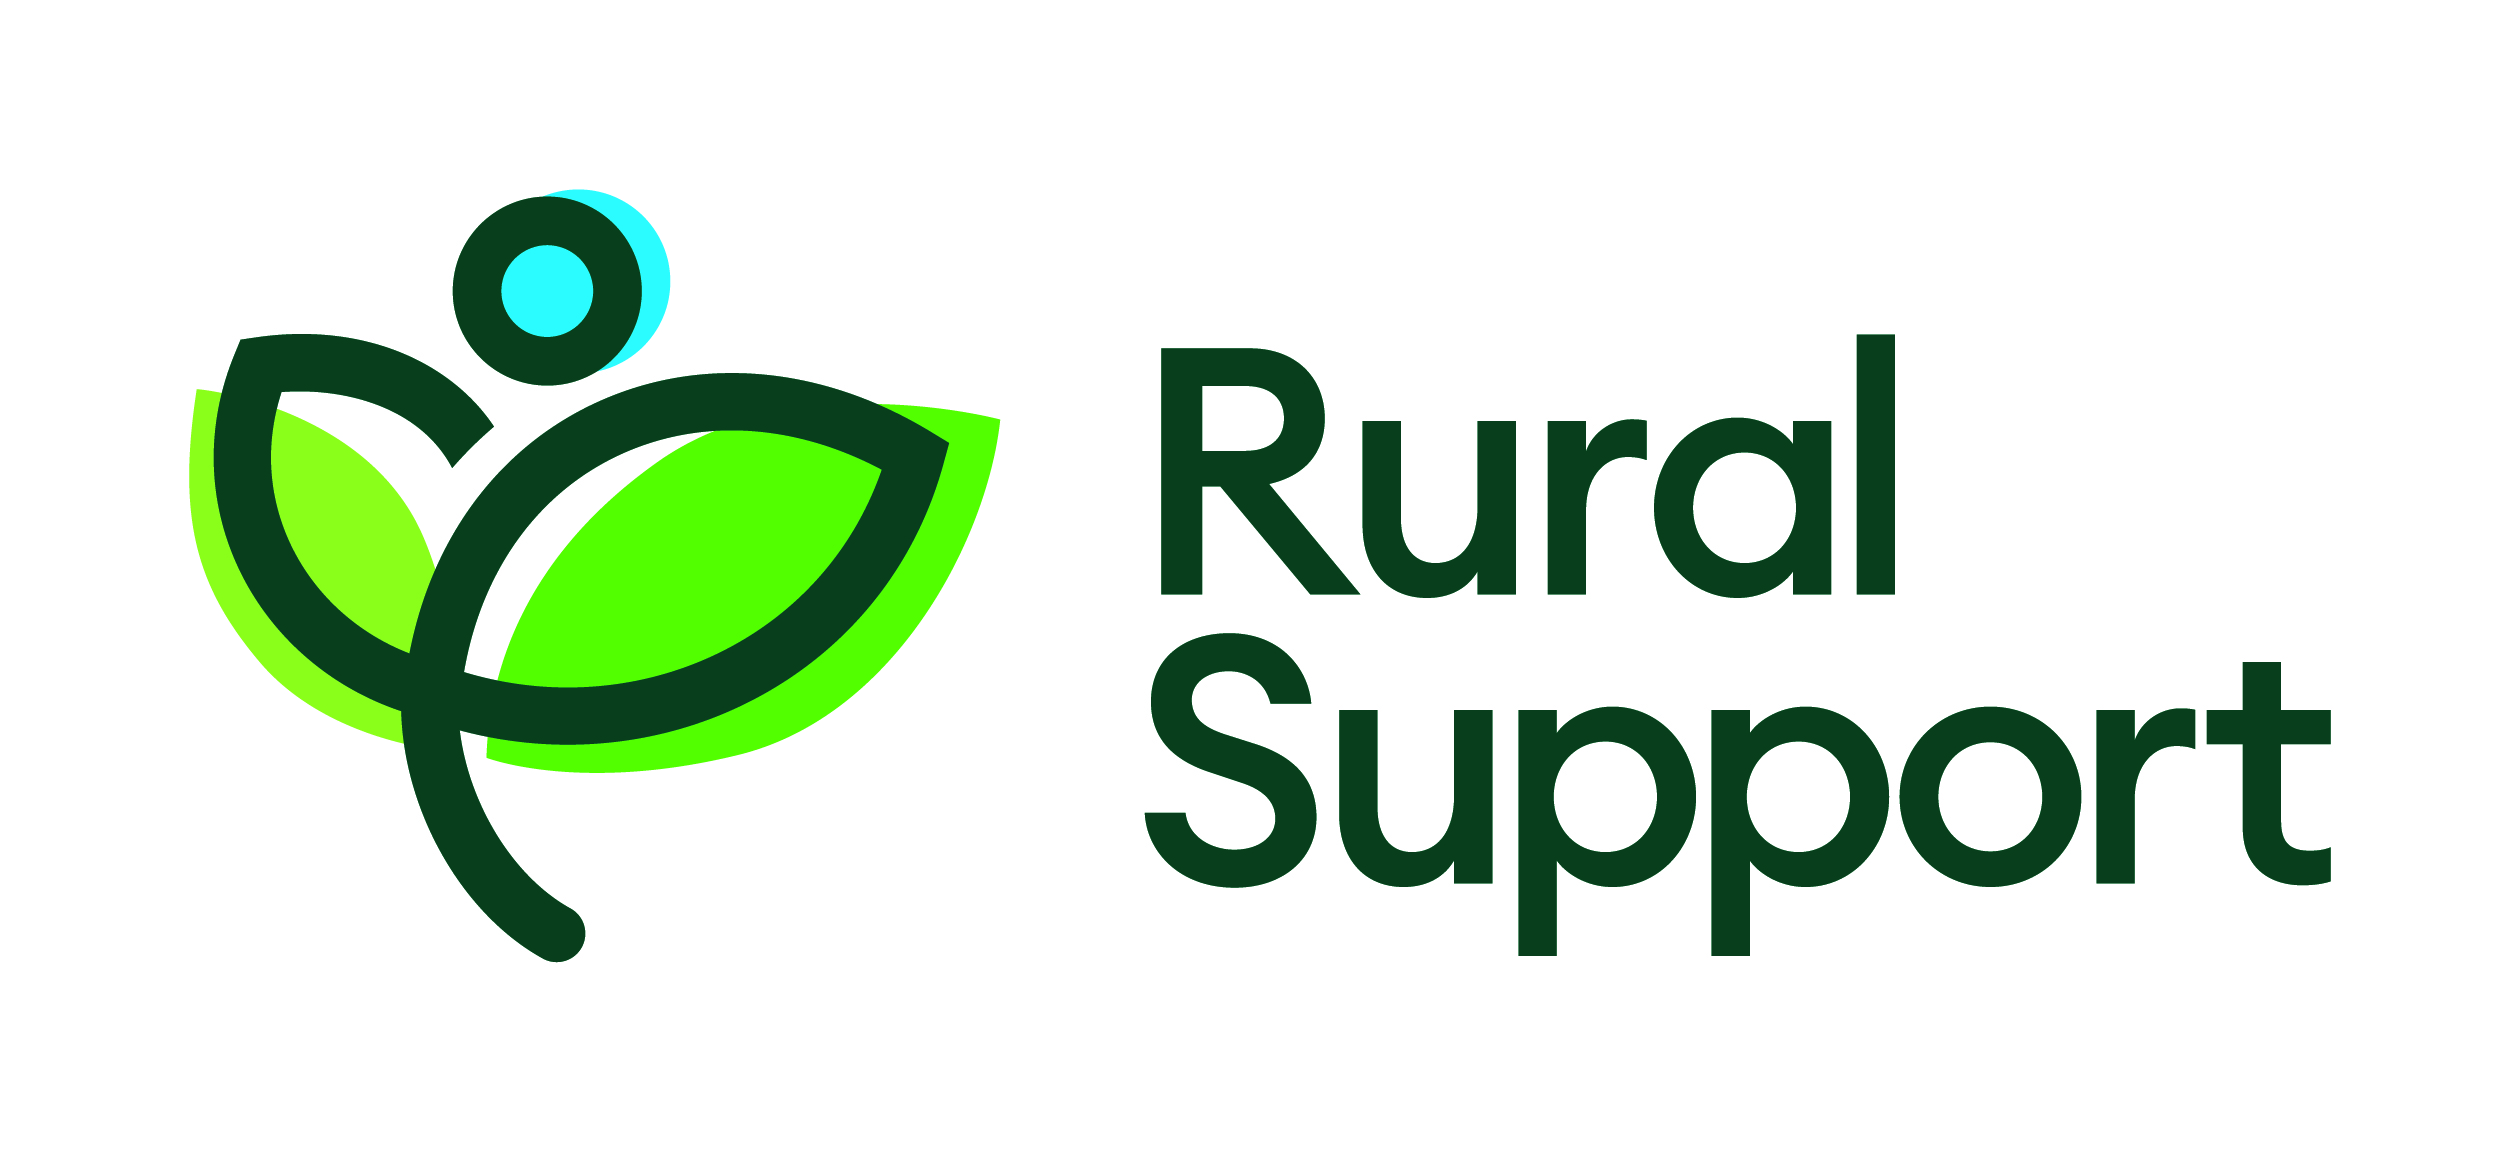 Rural-Support-logo.jpg